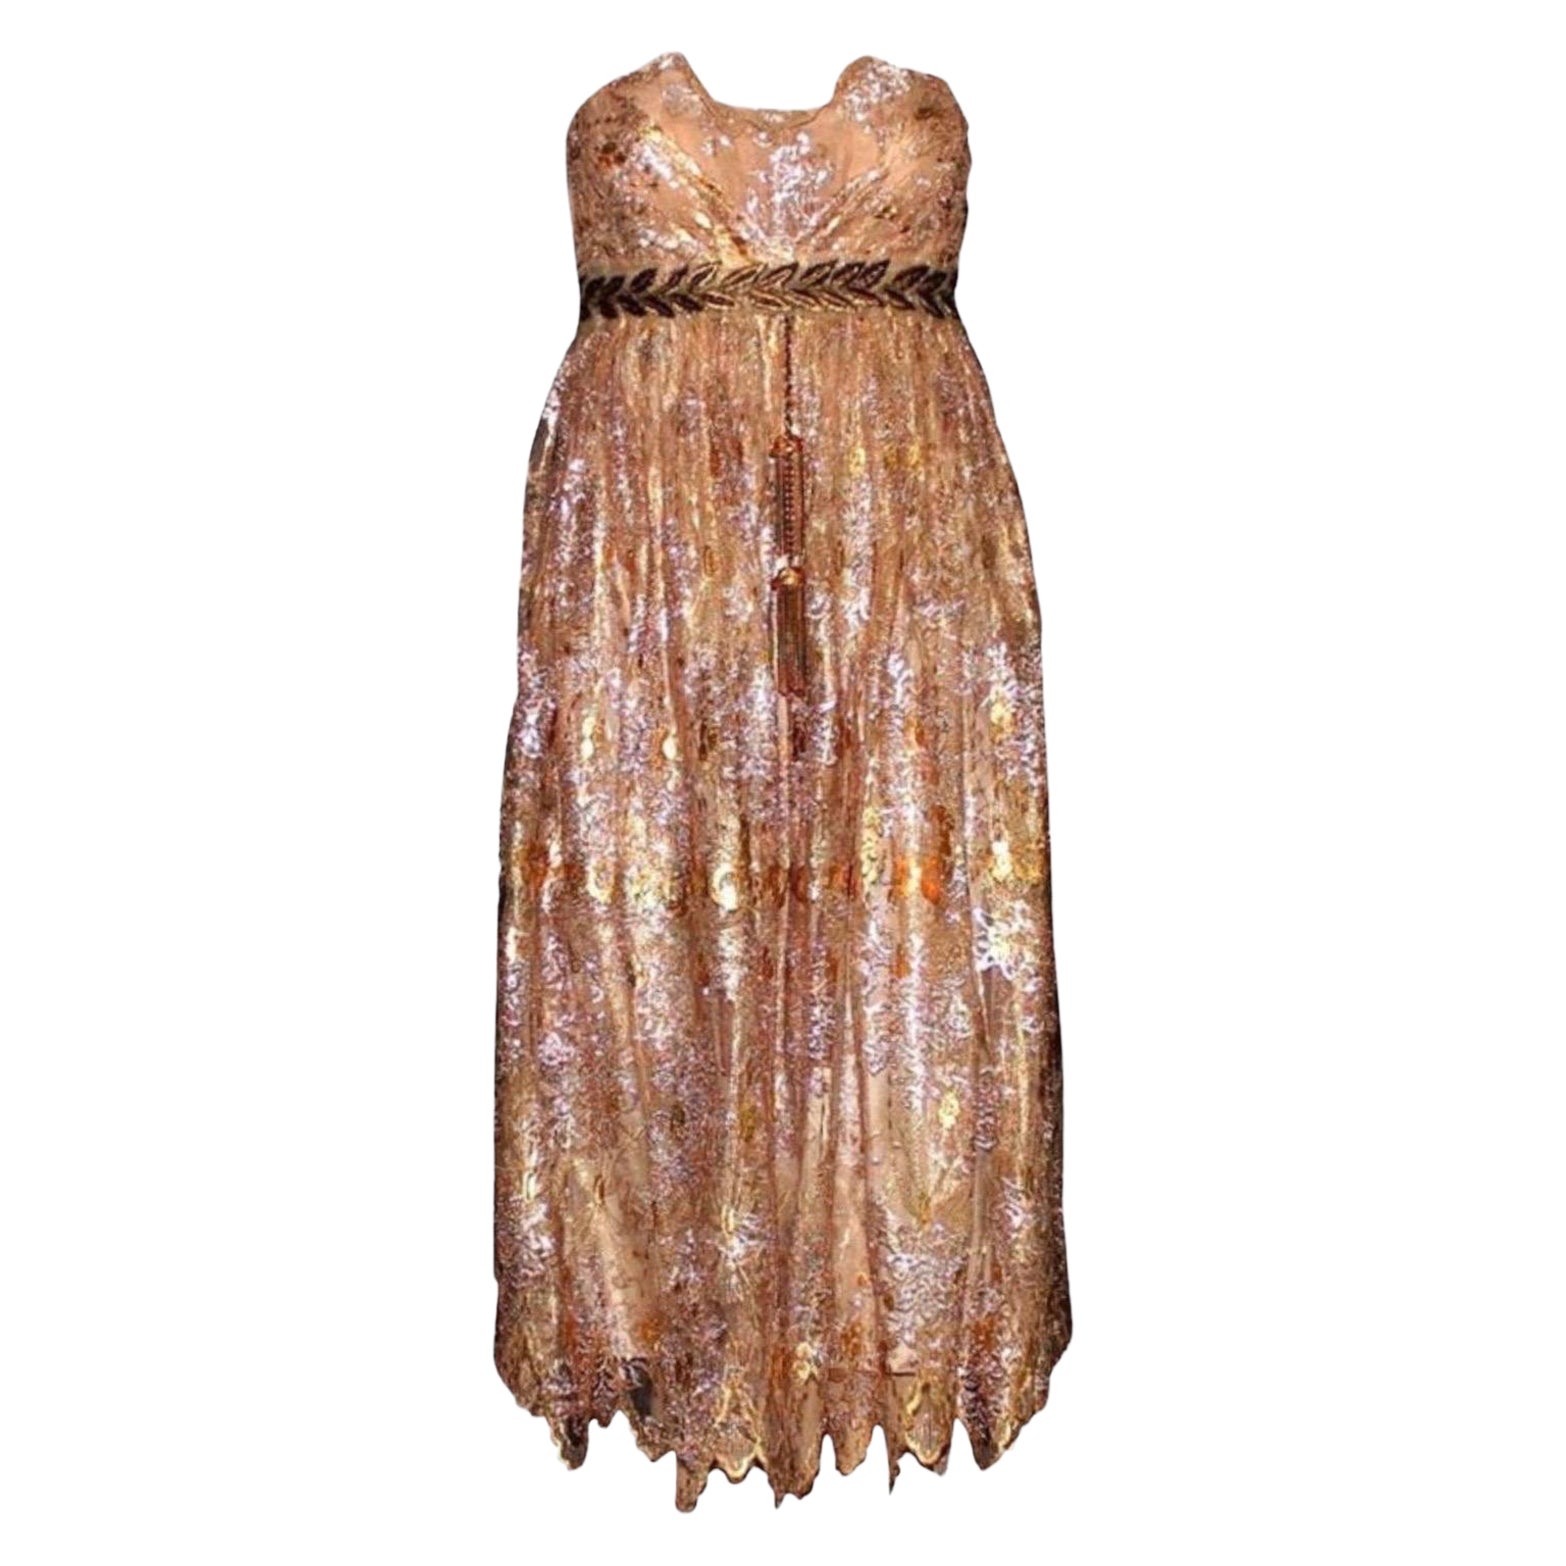 UNWORN Dolce & Gabbana 2006 Gold Metallic Lace Tassel Empire Dress Gown 42